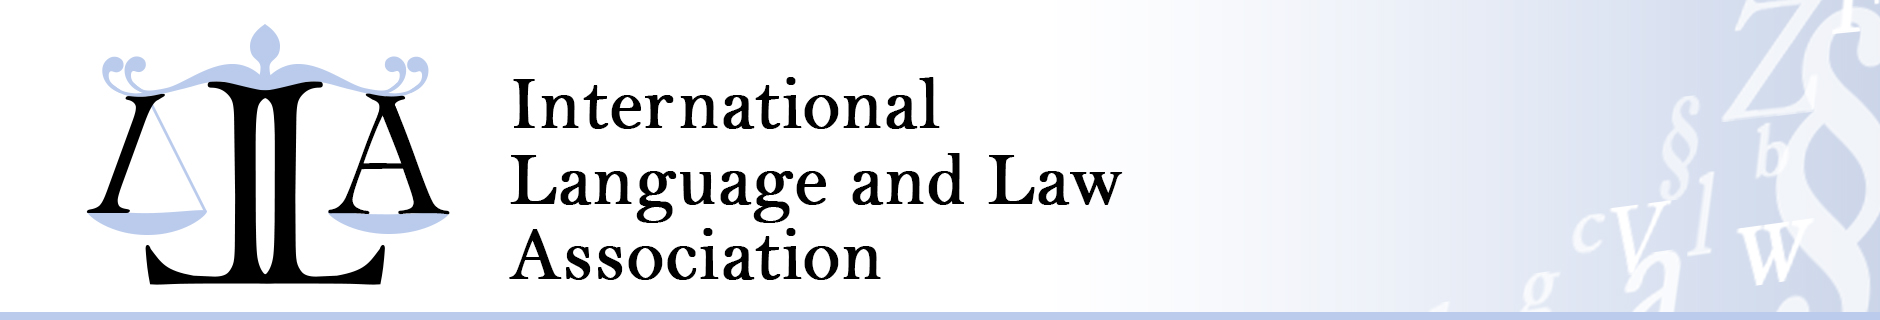 International Language and Law Association (ILLA)